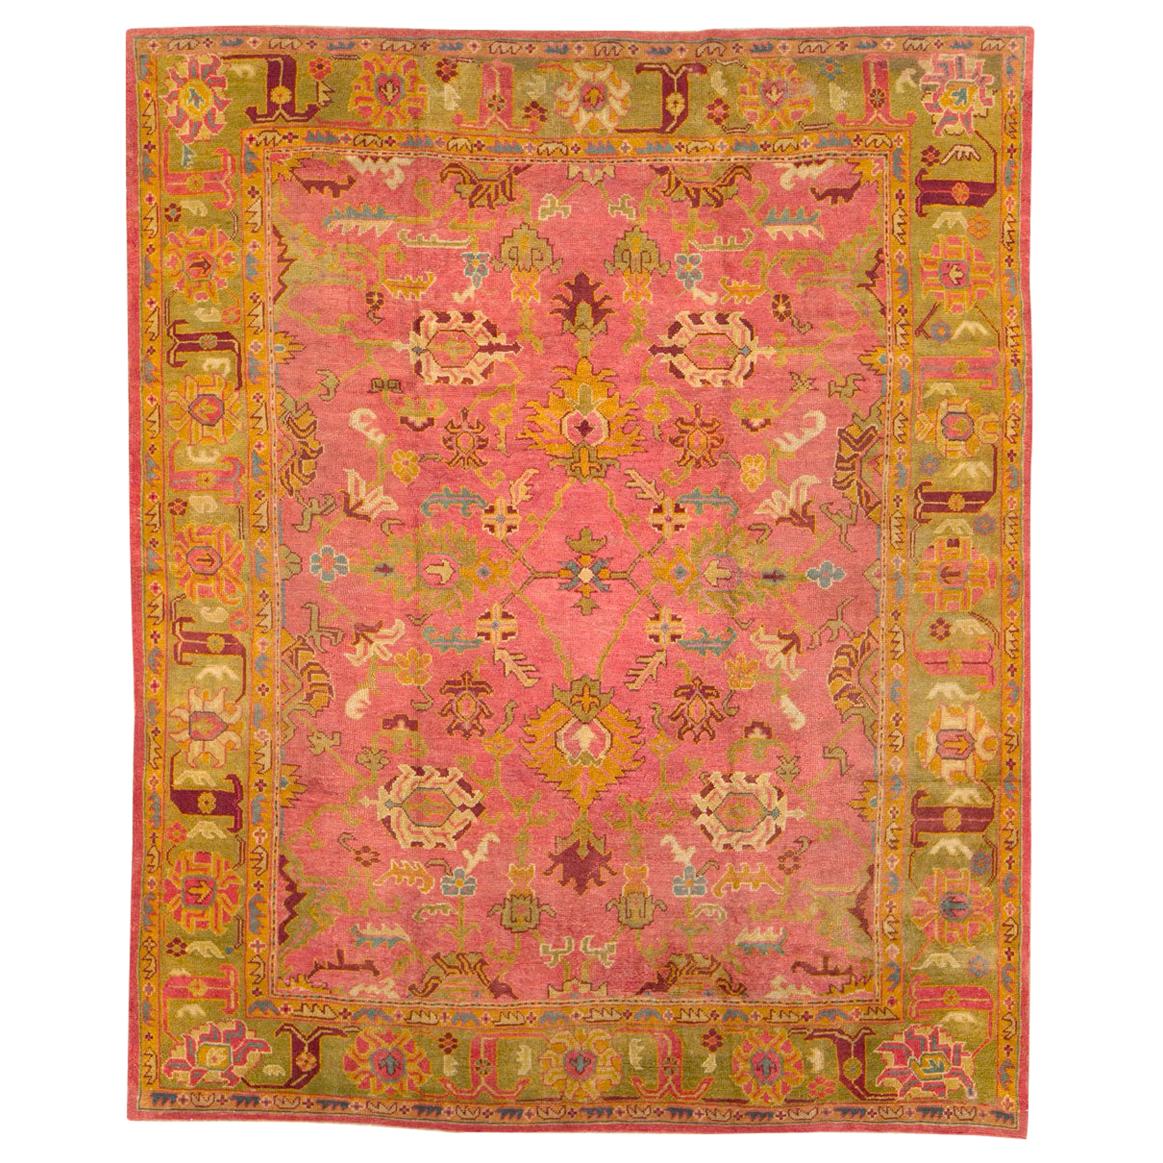 Early 20th Century Handmade Turkish Oushak Room Size Carpet